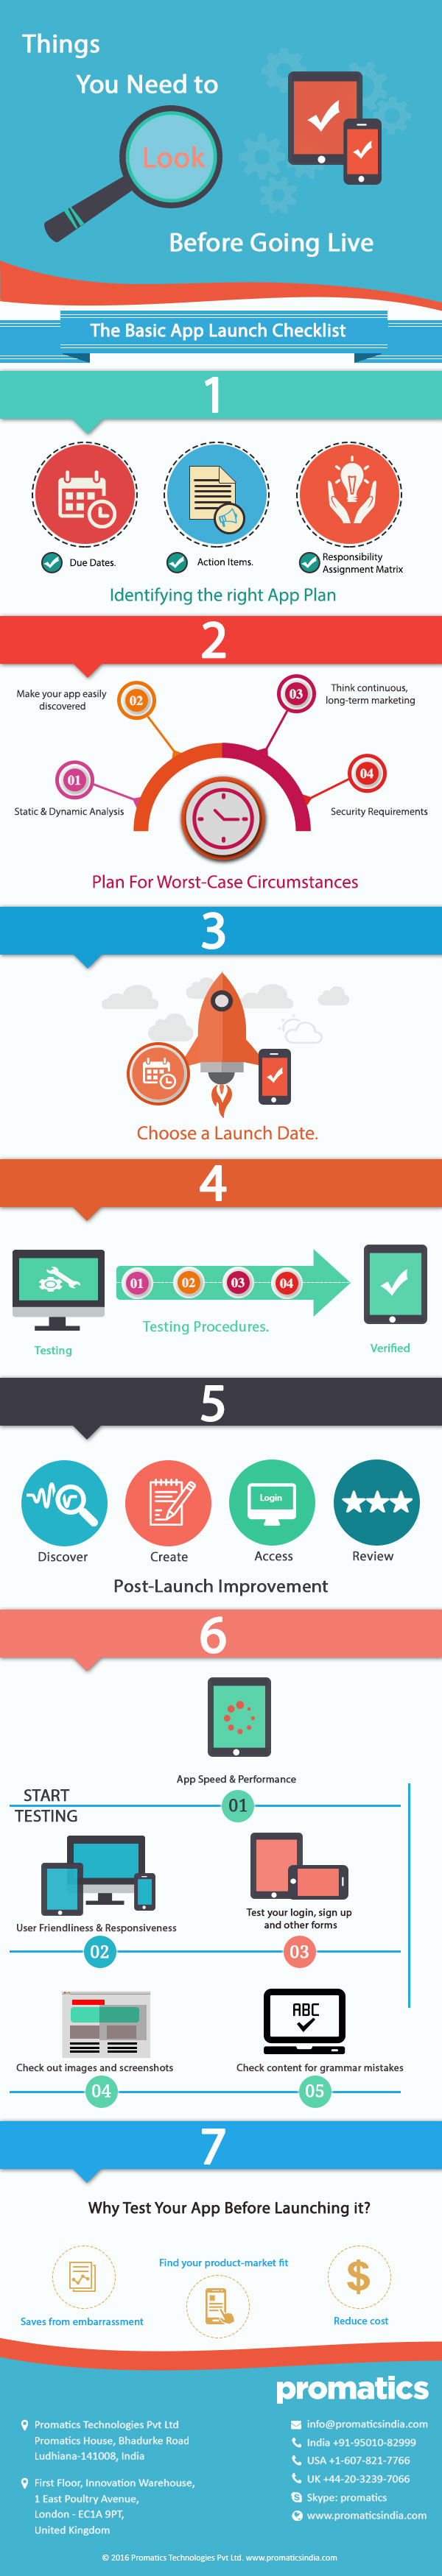 The basic mobile app launch checklist